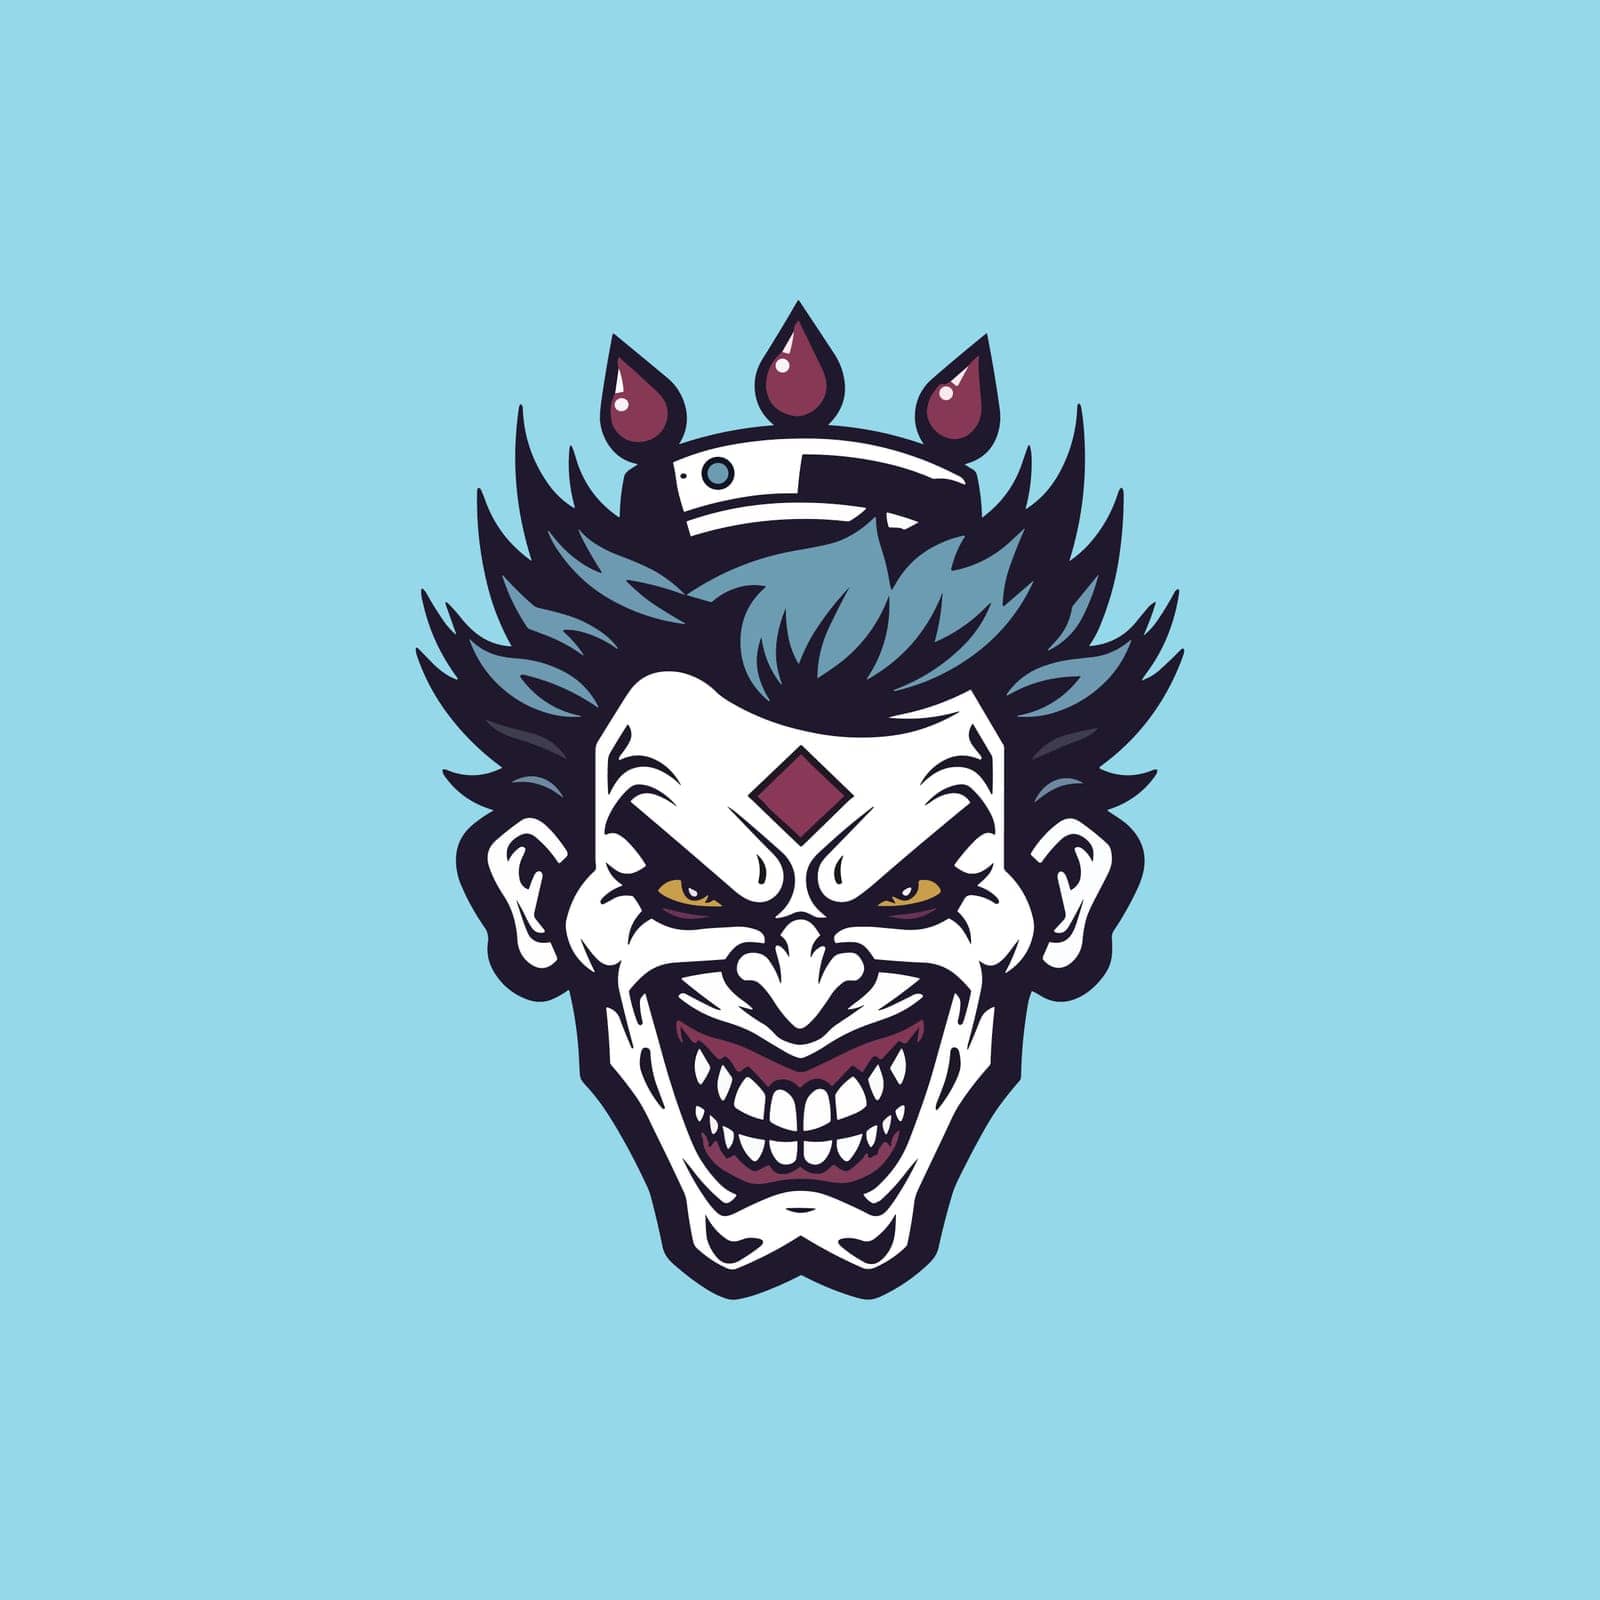 joker wear crown vector illustration by Vinhsino